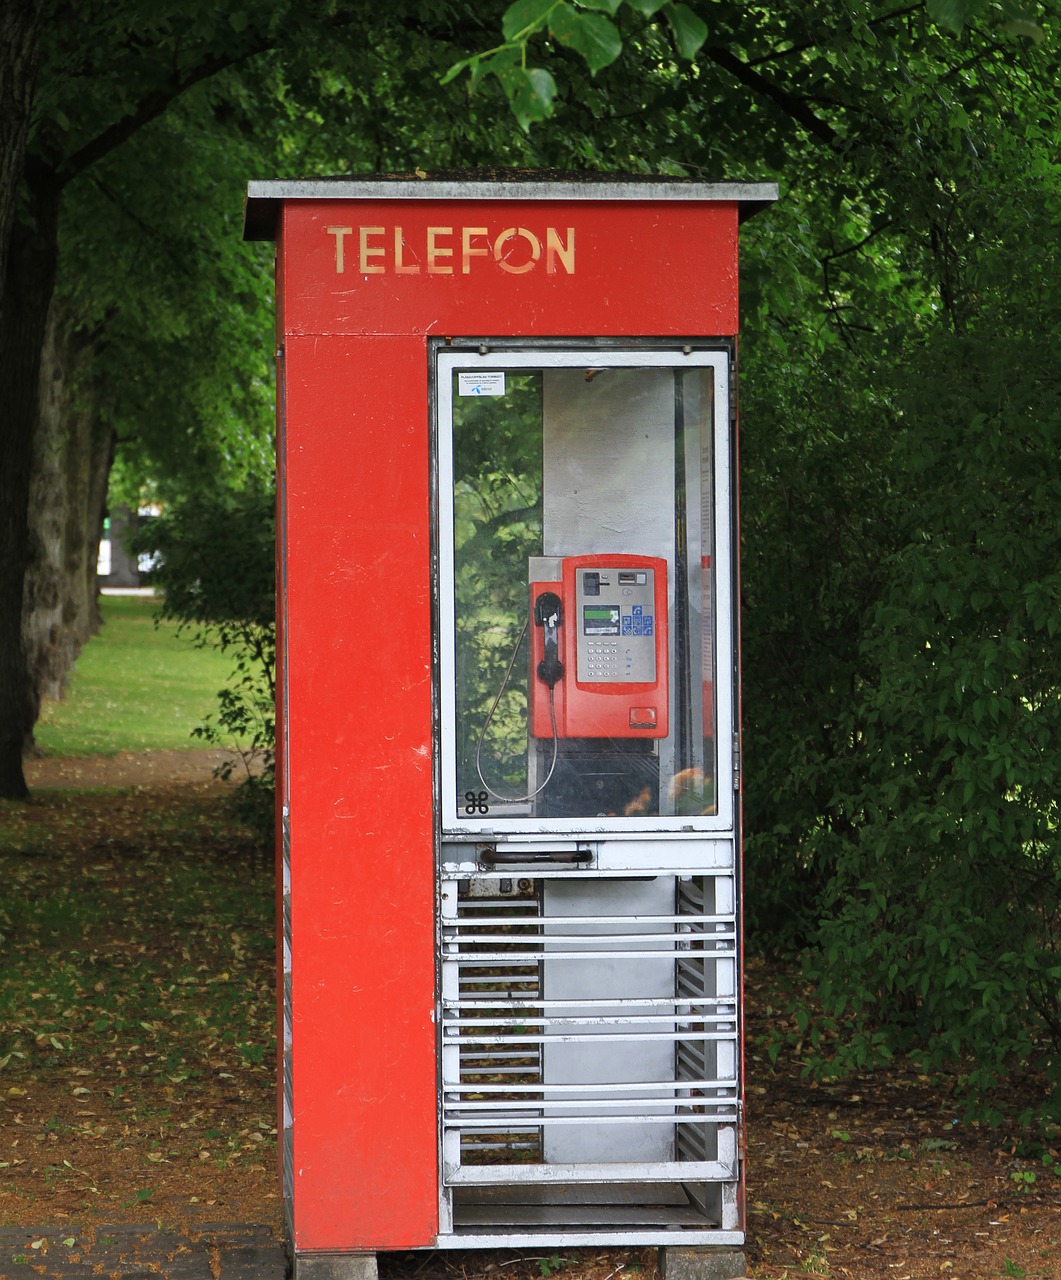 Telefono Būdelė, Telefon, Raudona, Parkas, Oslo, Norvegija, Vintage, Senamadiškas, Telefonas, Stendas